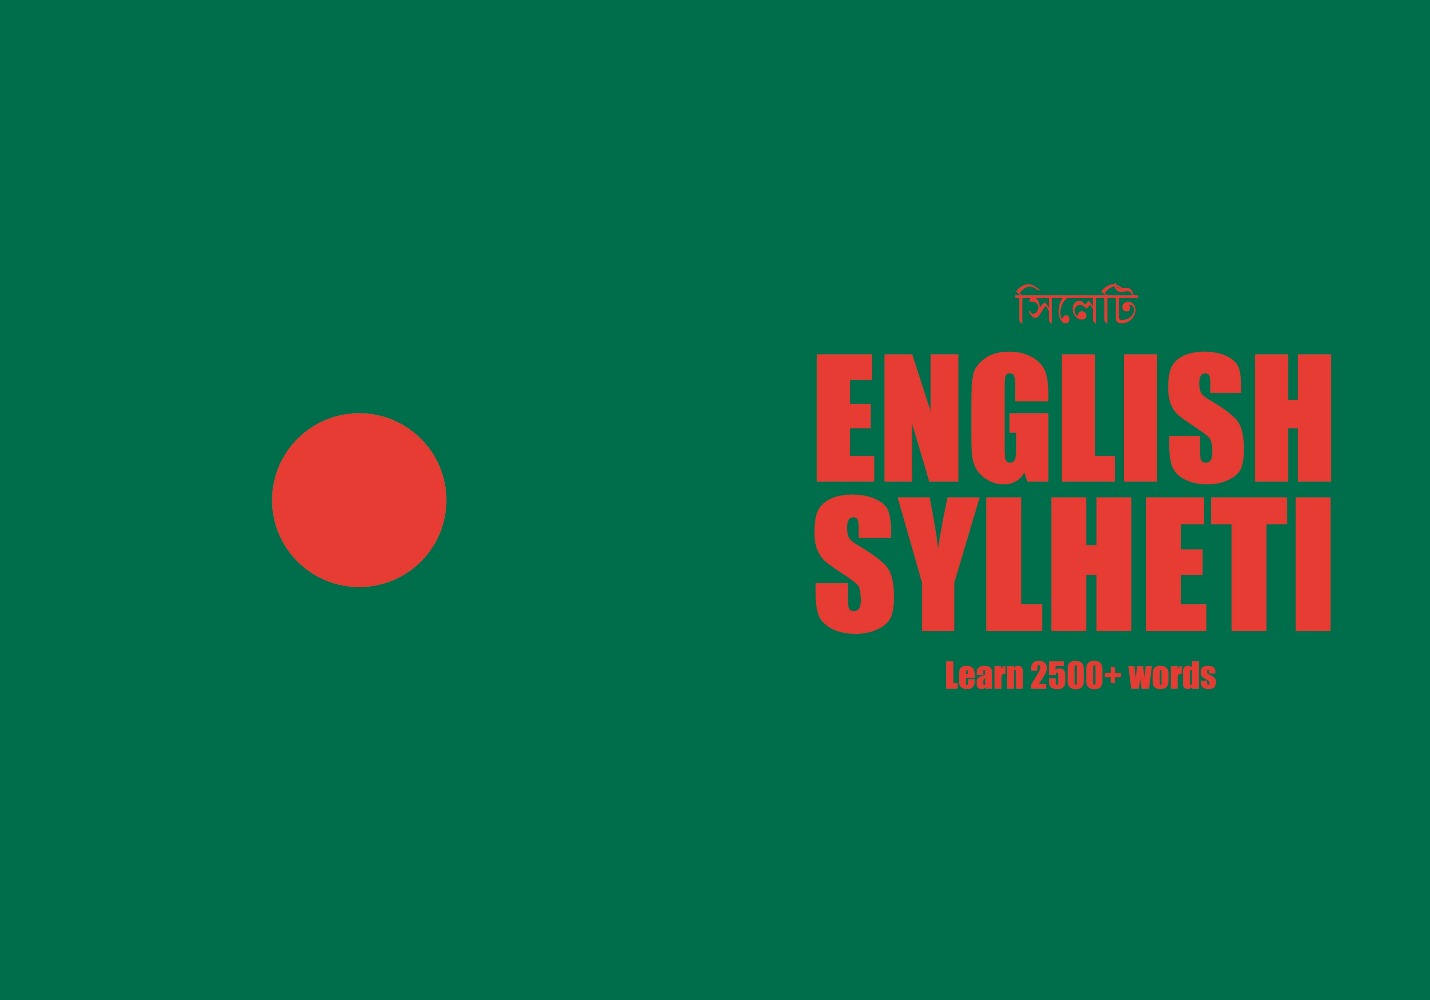 Sylheti language learning notebook cover